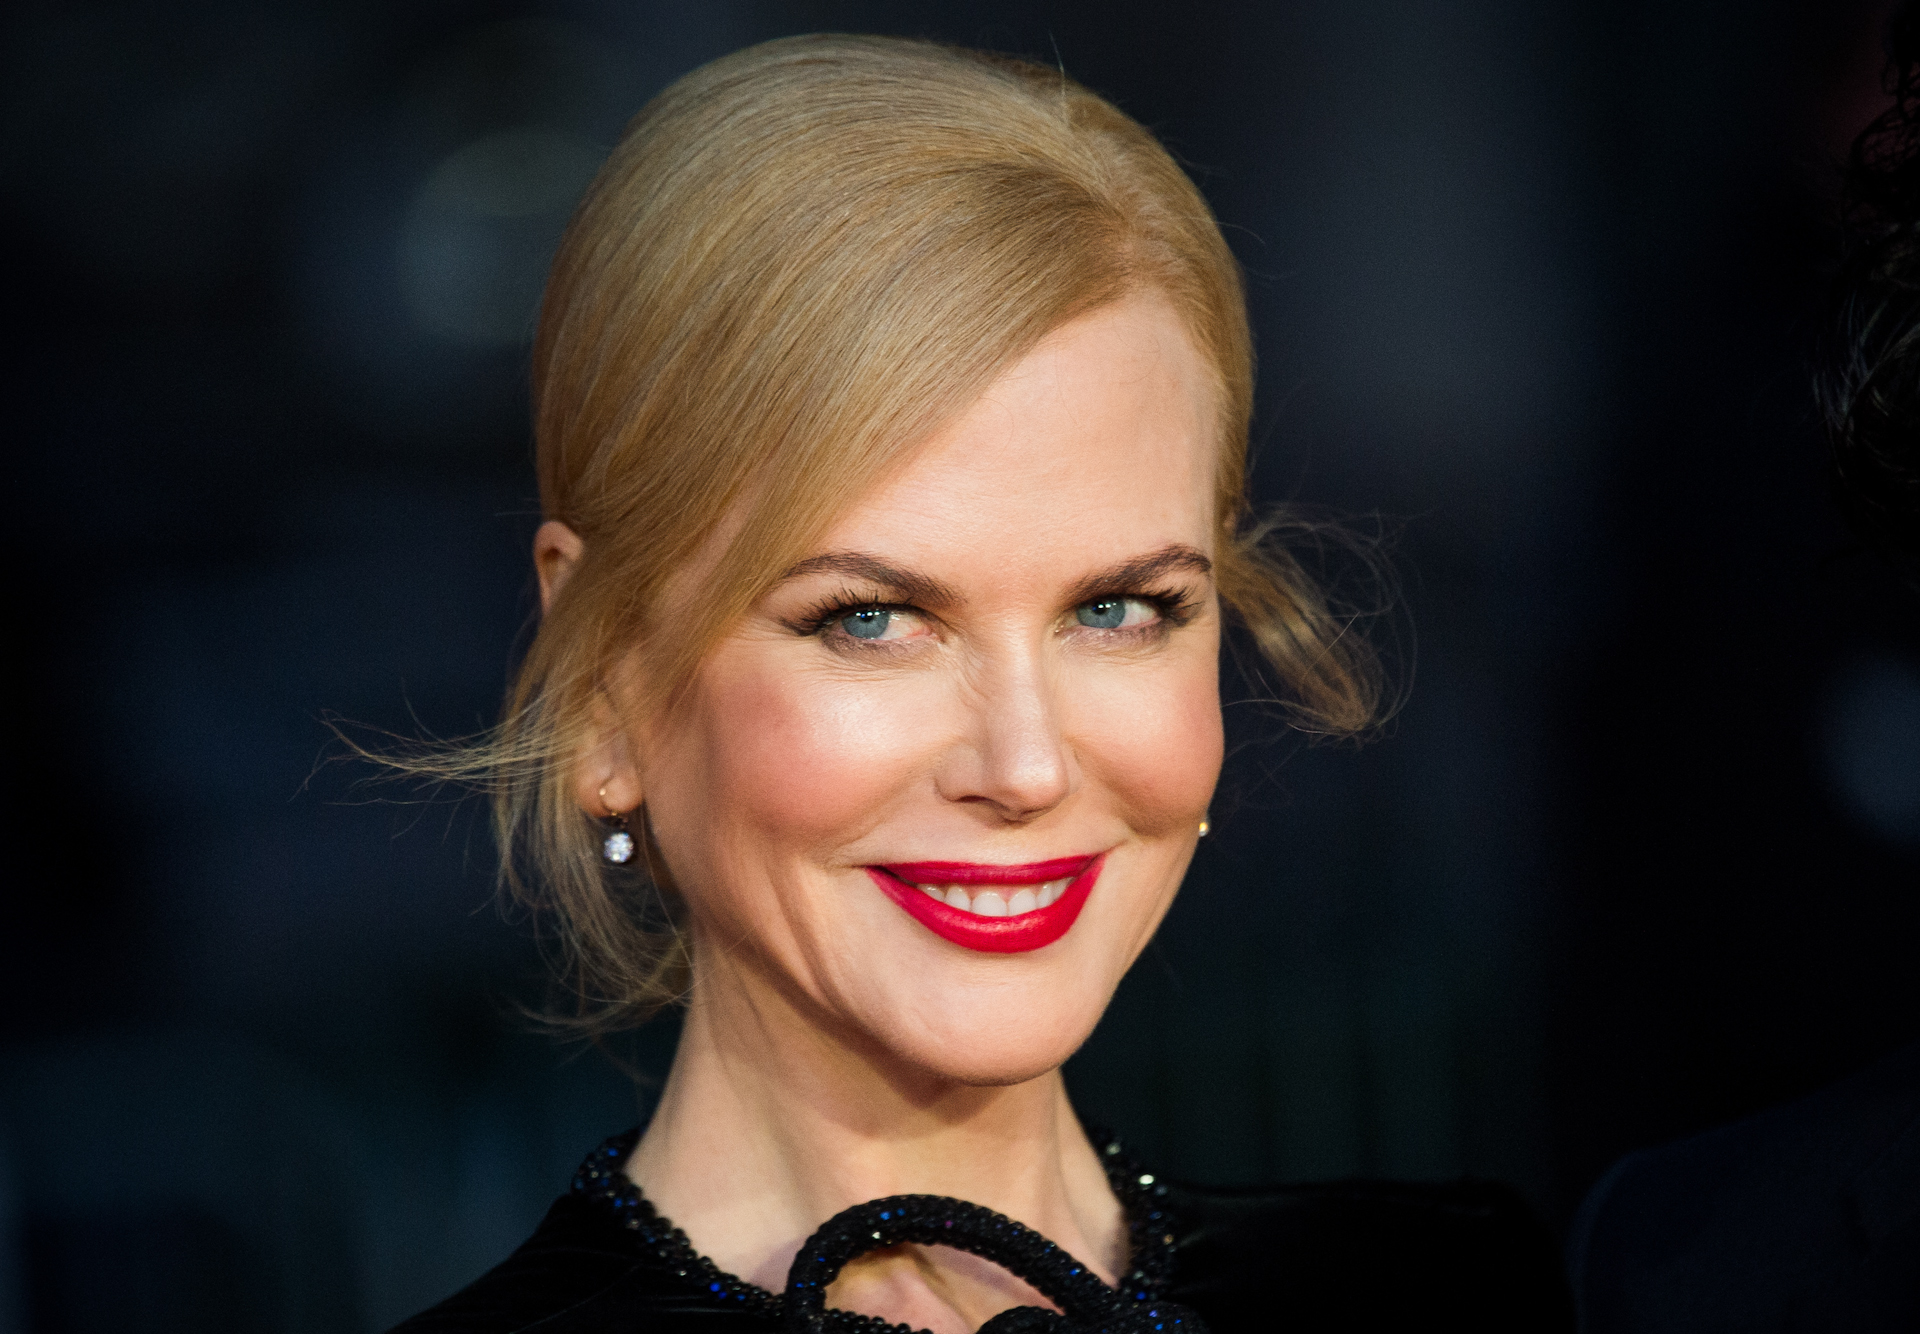 The most beautiful photos of Nicole Kidman